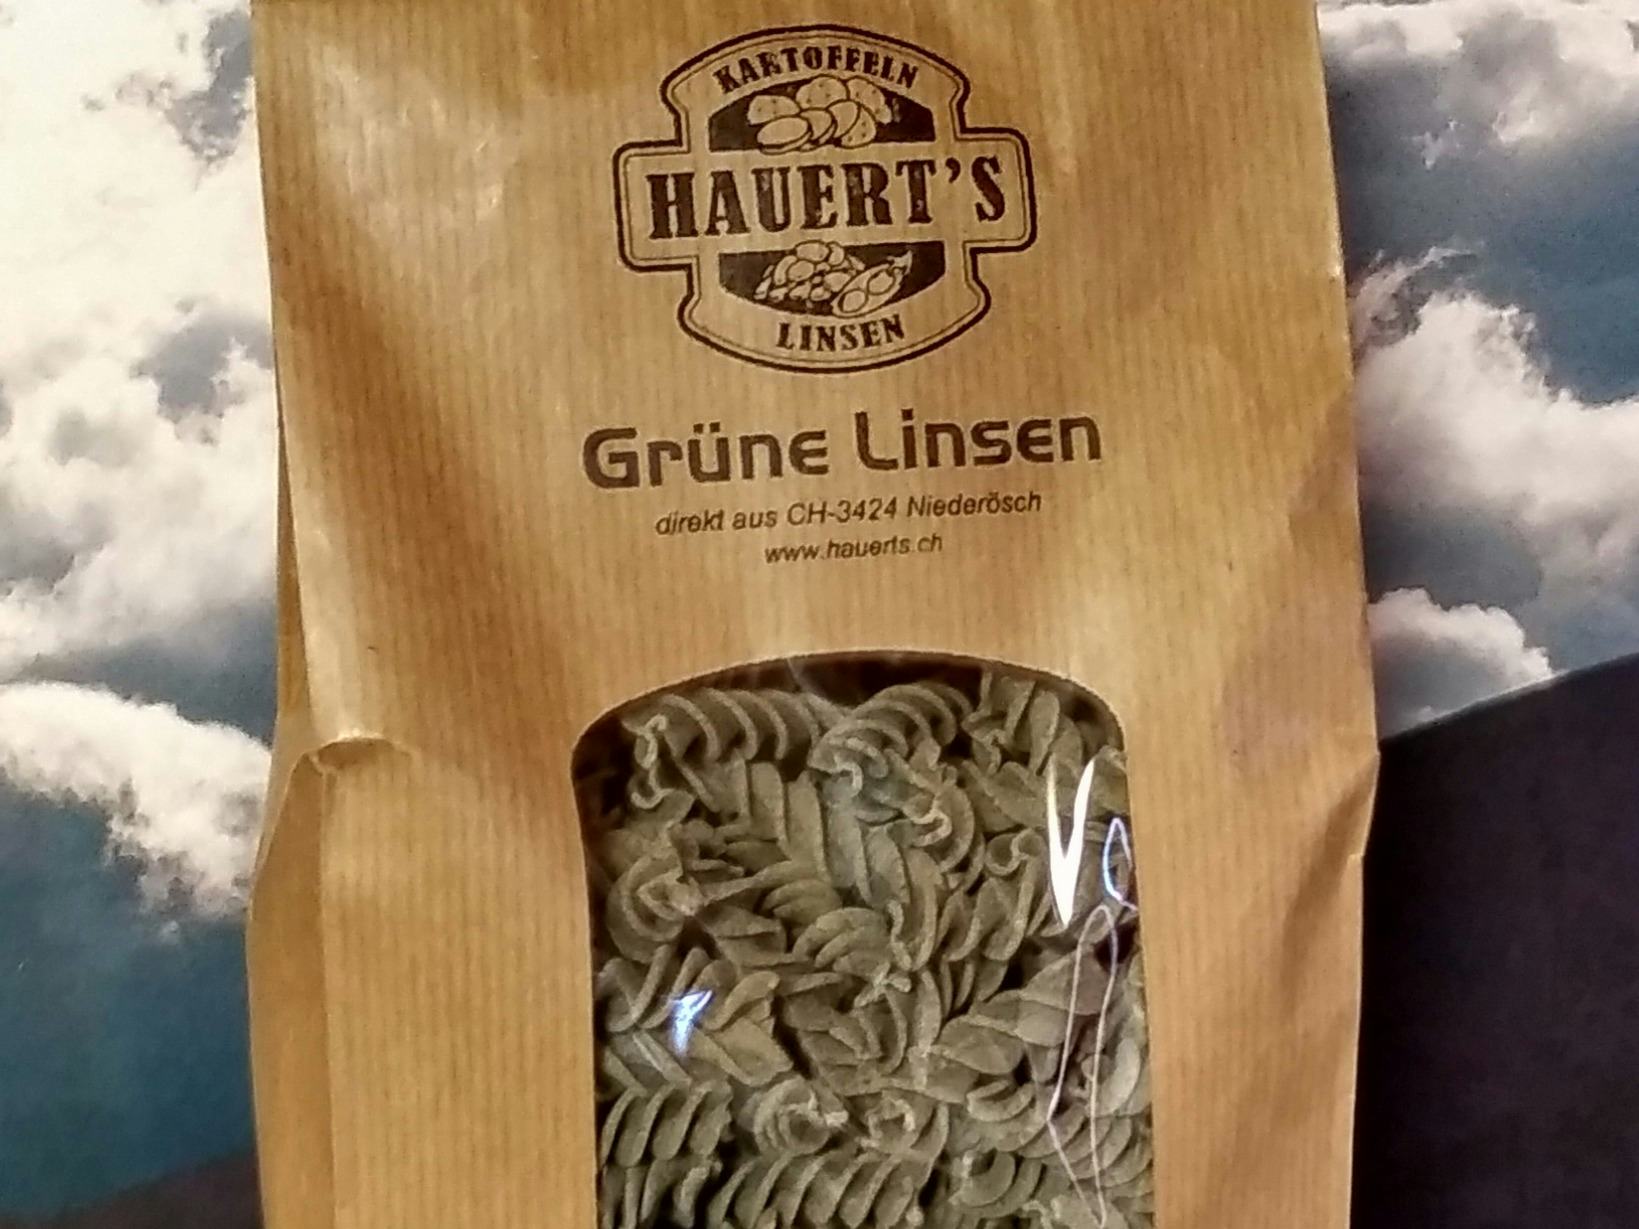 Grüne Linsen Spiralen 550g, produit artisanal en vente directe en Suisse